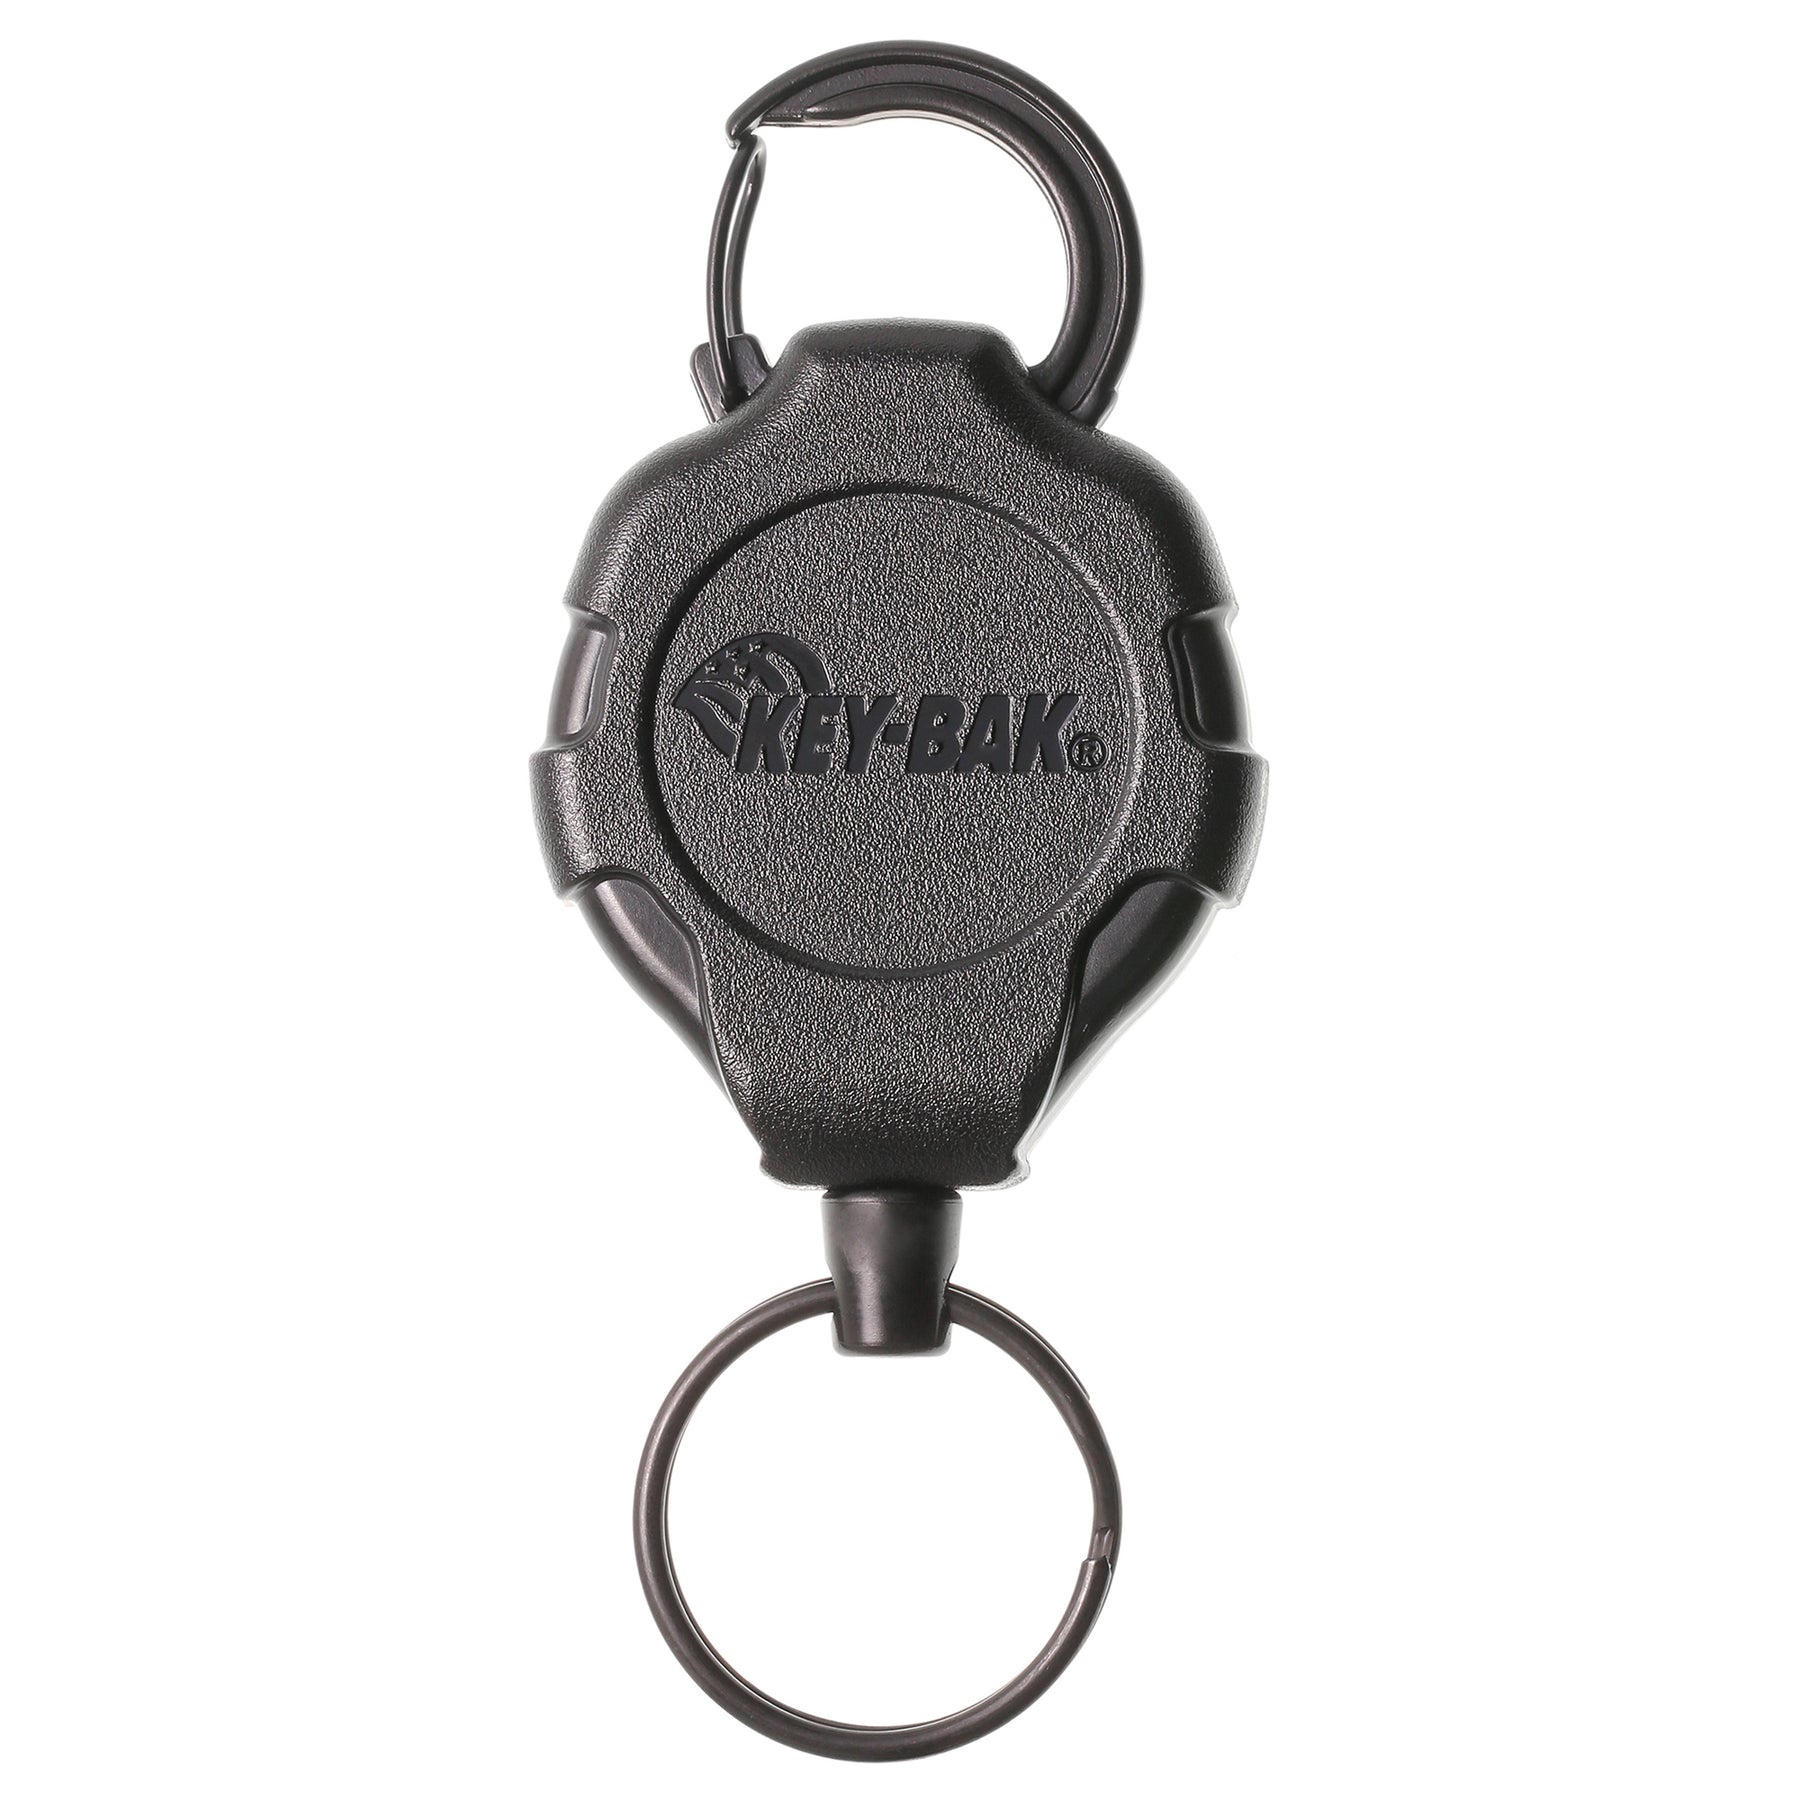 Key-Bak 0308-201 Key Ring with Snap-On Carabiner, Black